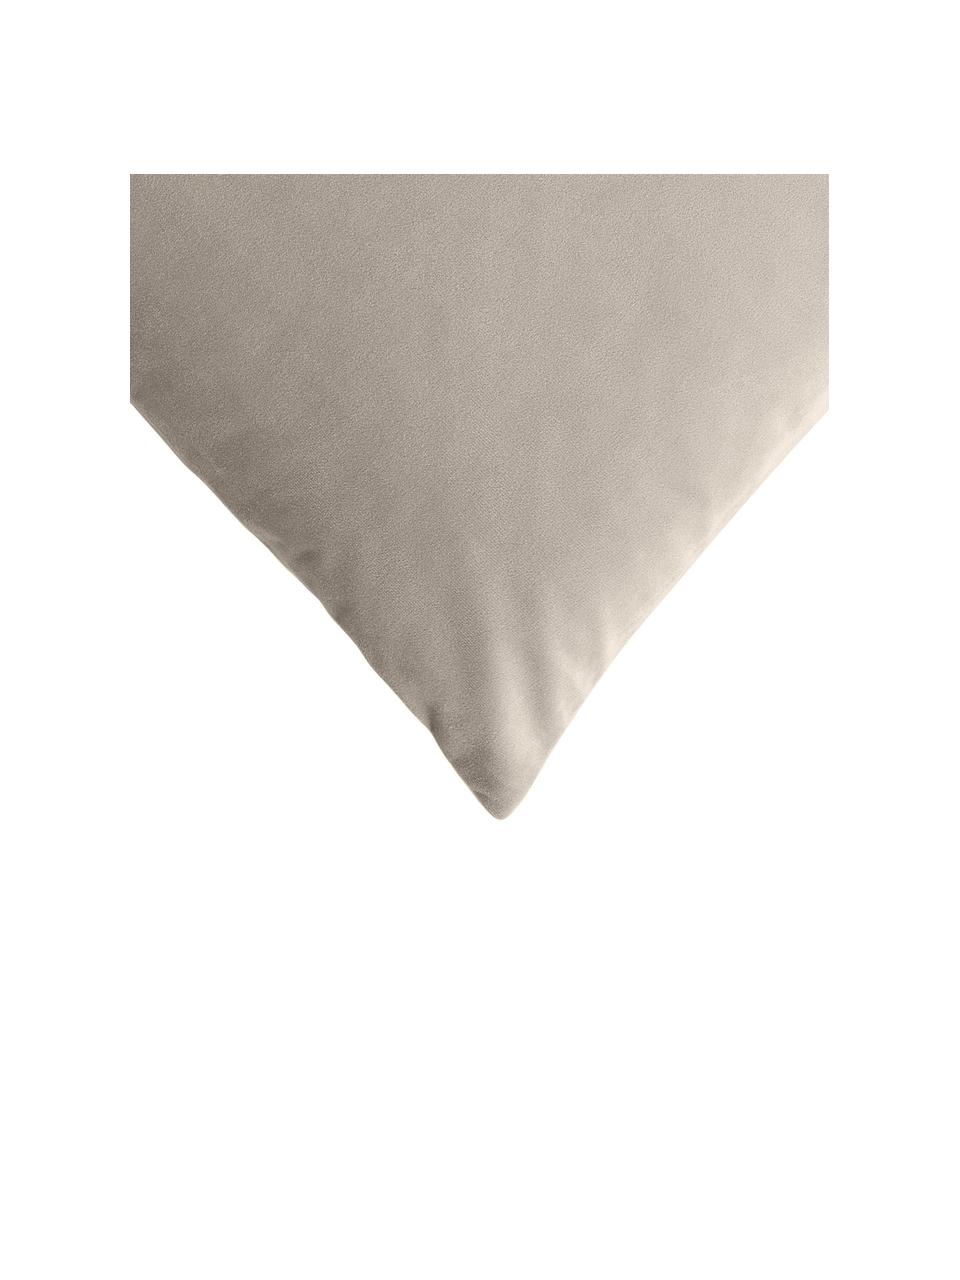 Samt-Kissenhüllen Rush, 2 Stück, 100 % Polyester (recycled), Beige, B 45 x L 45 cm